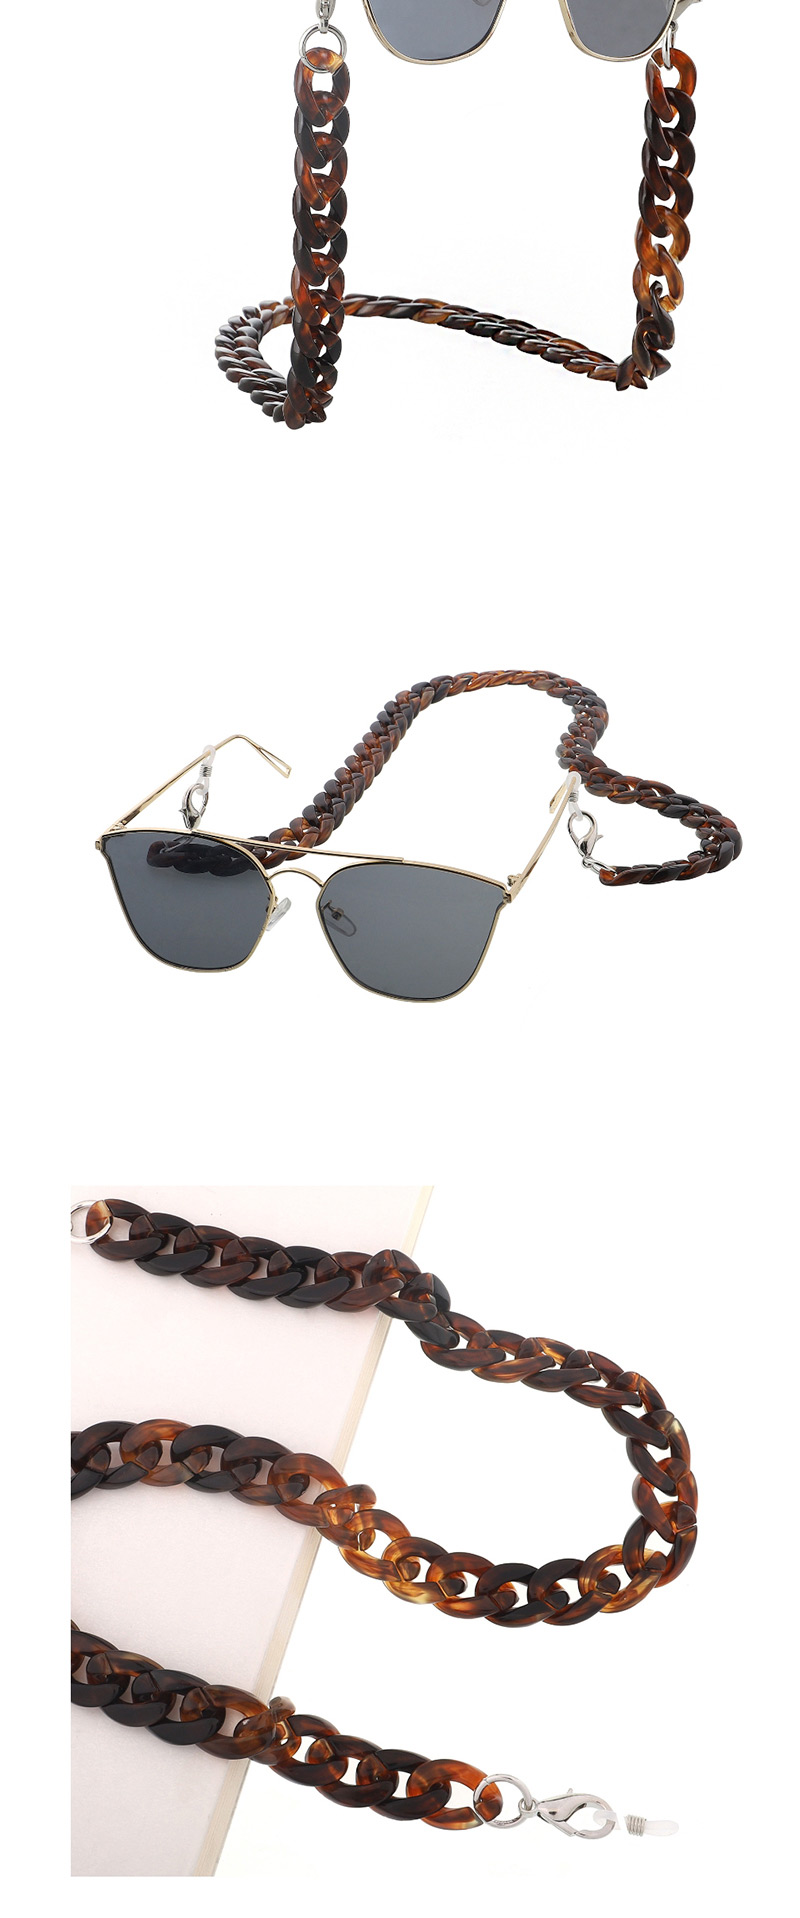 Fashion Black And White Acrylic Glasses Chain,Sunglasses Chain